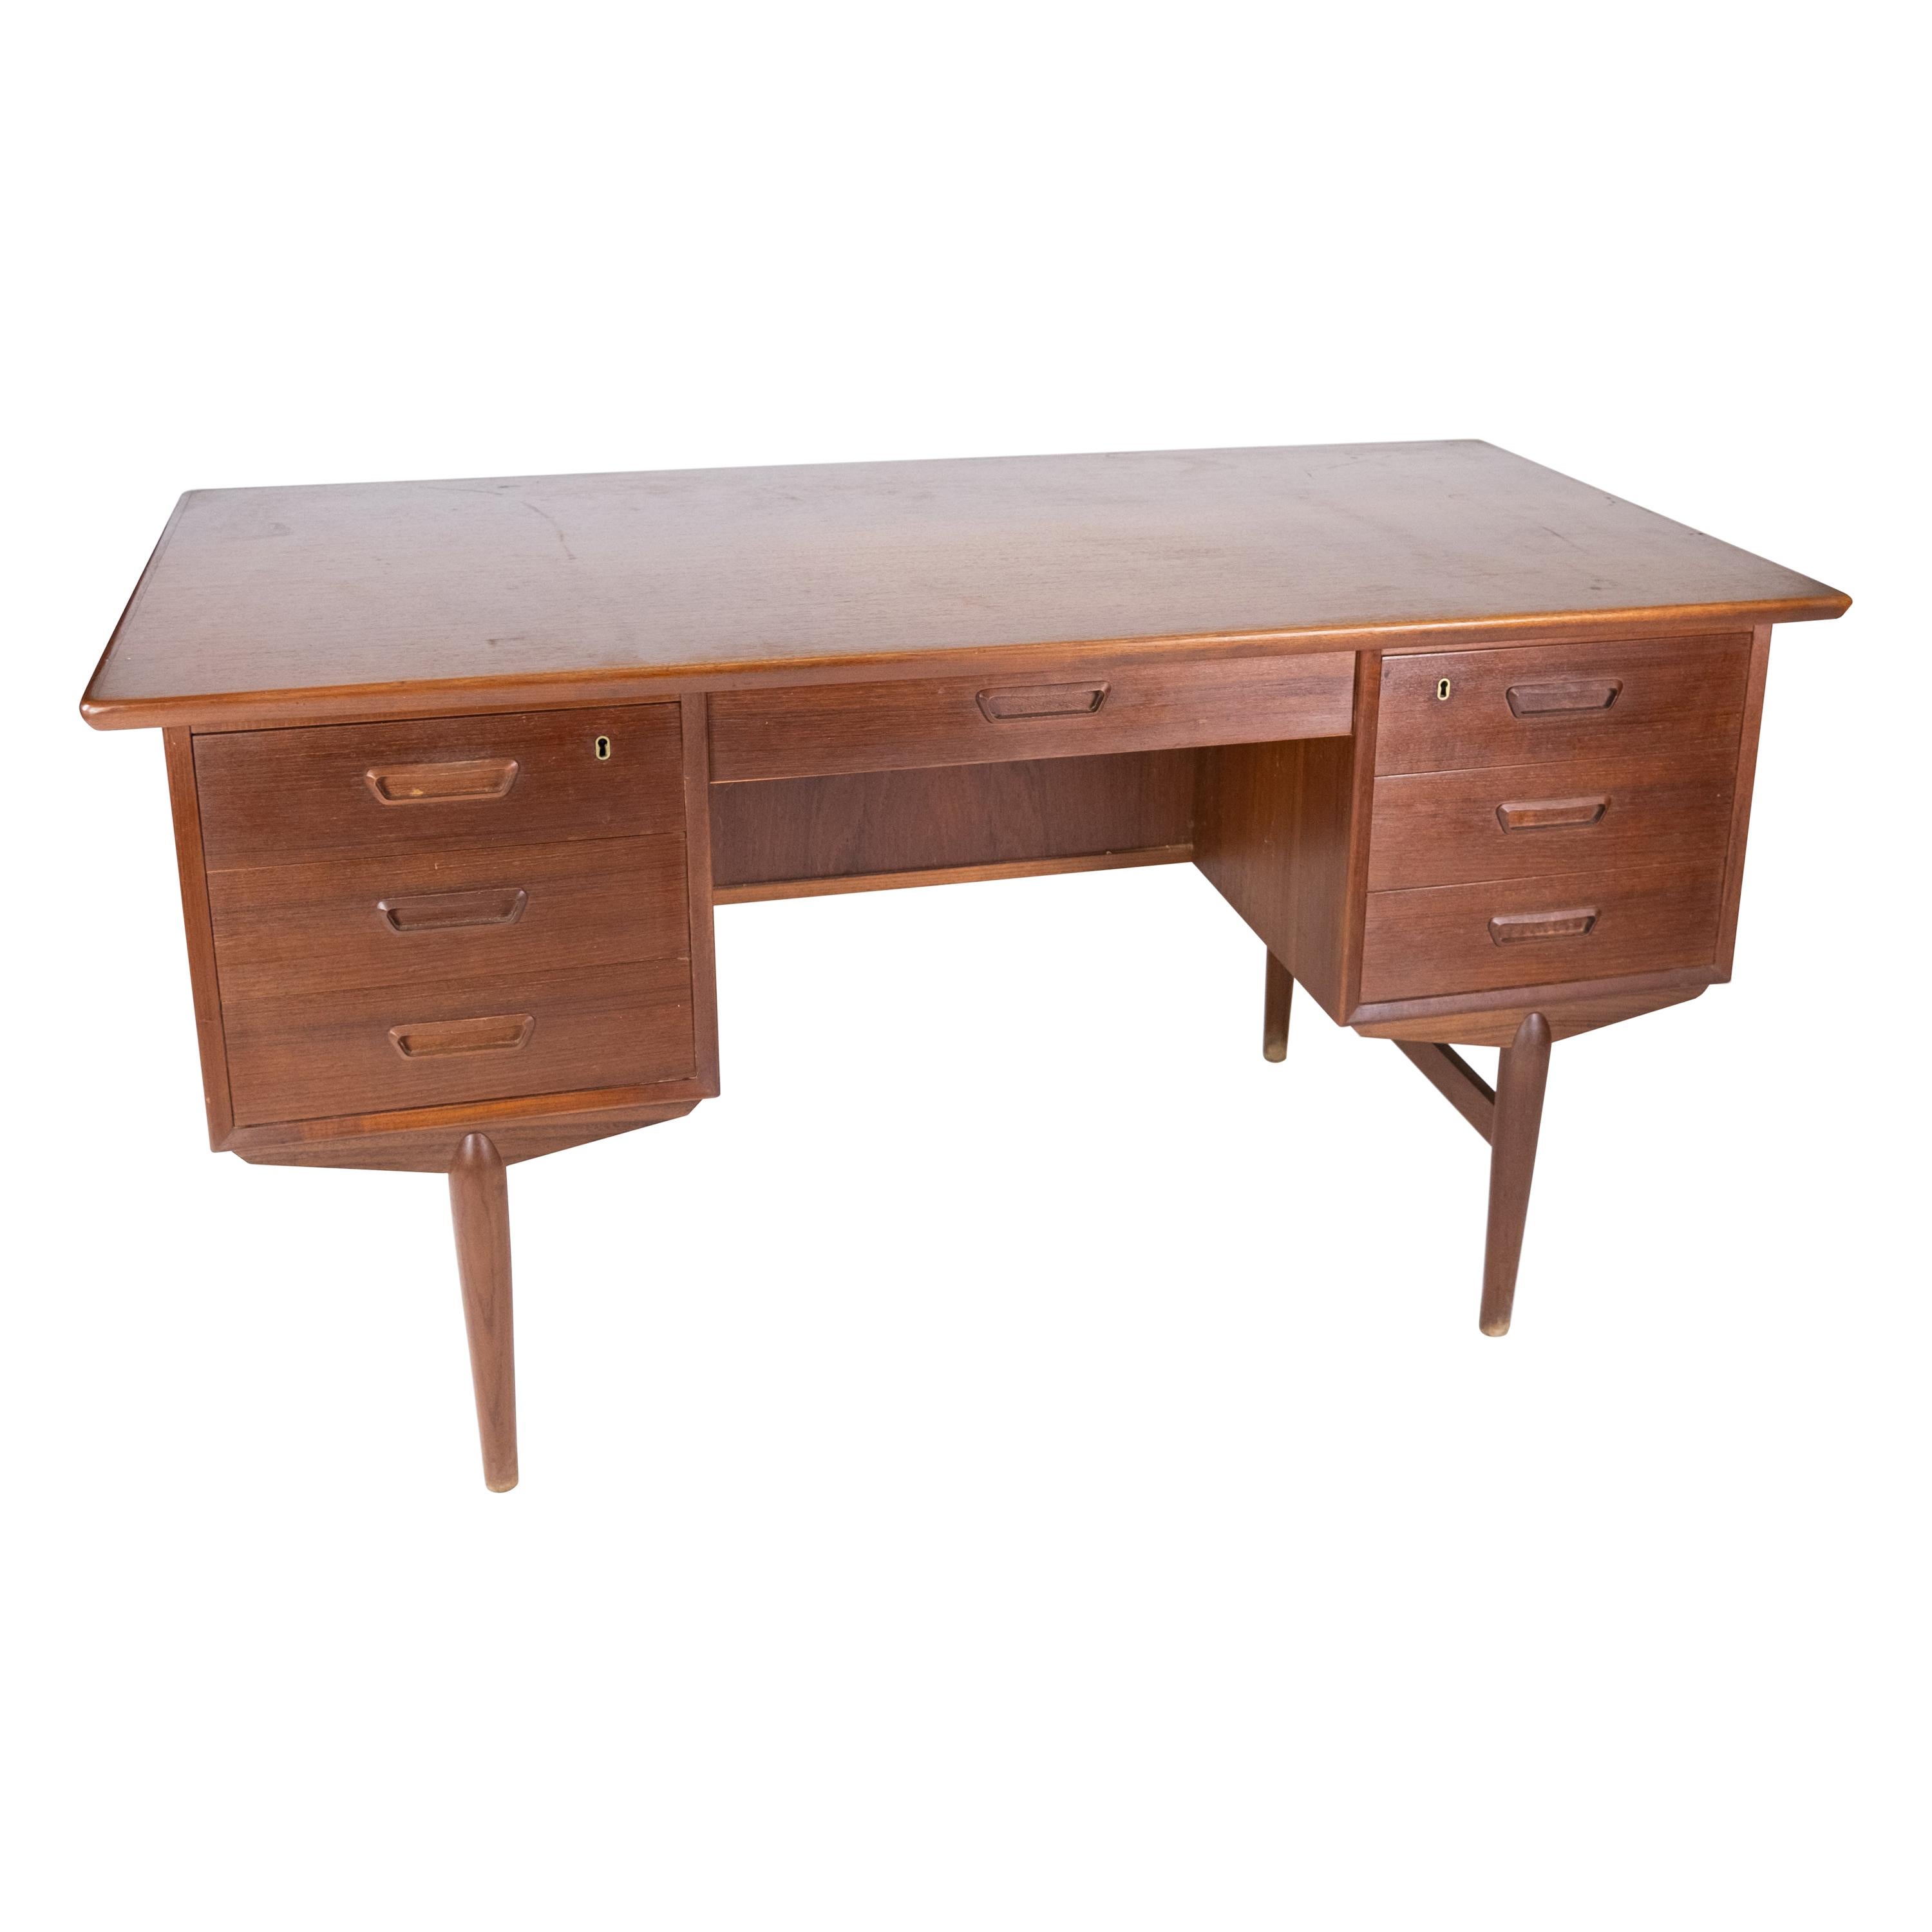 Desk in Teak of Danish Design from the 1960s For Sale